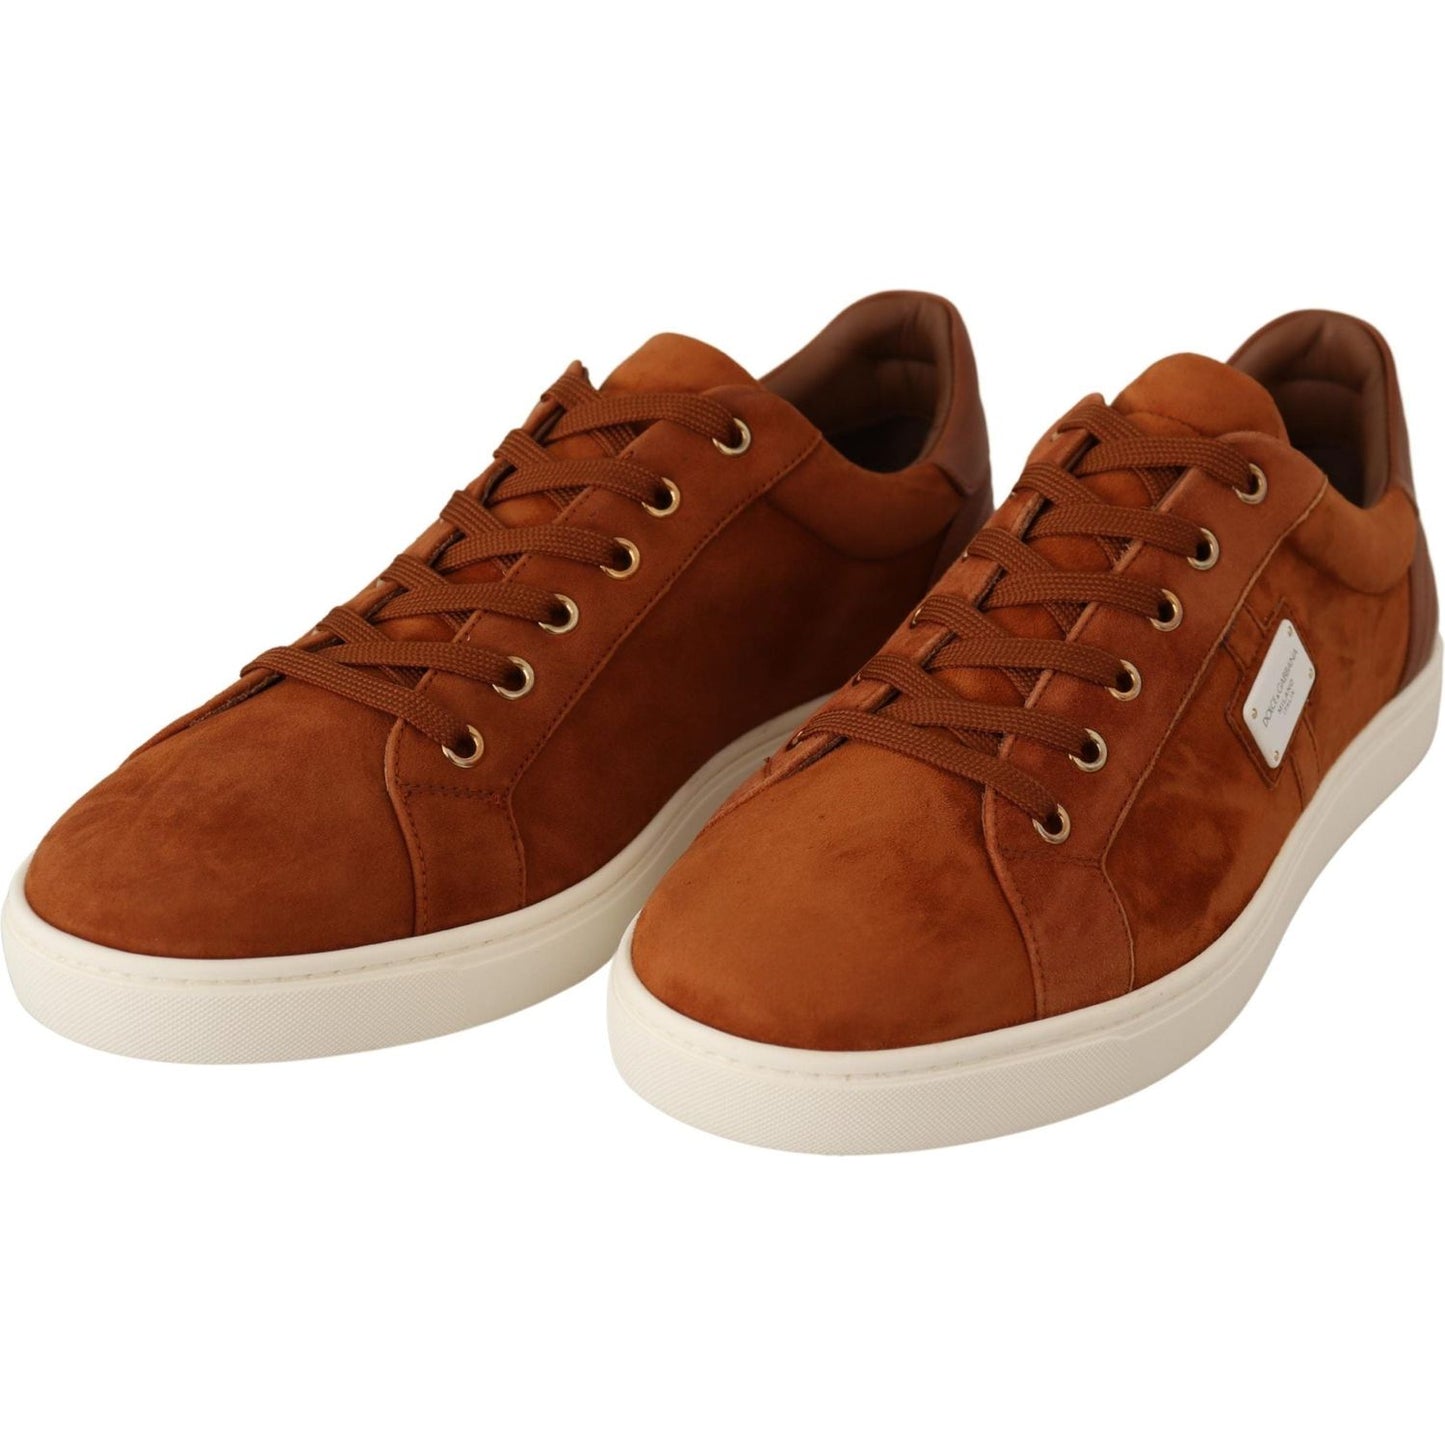 Dolce & Gabbana Elegant Light Brown Leather Sneakers light-brown-suede-leather-low-tops-sneakers